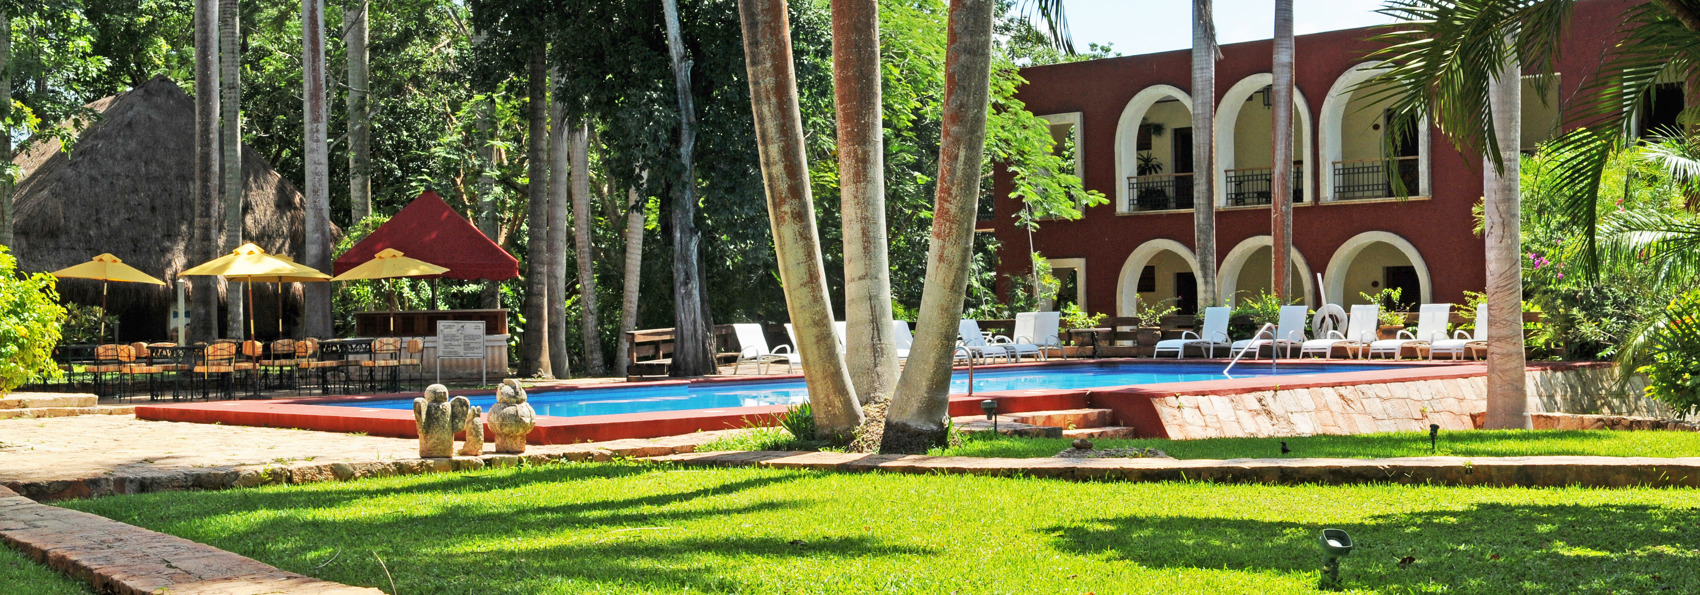 mexico - uxmal - hotel hacienda uxmal_pool_01